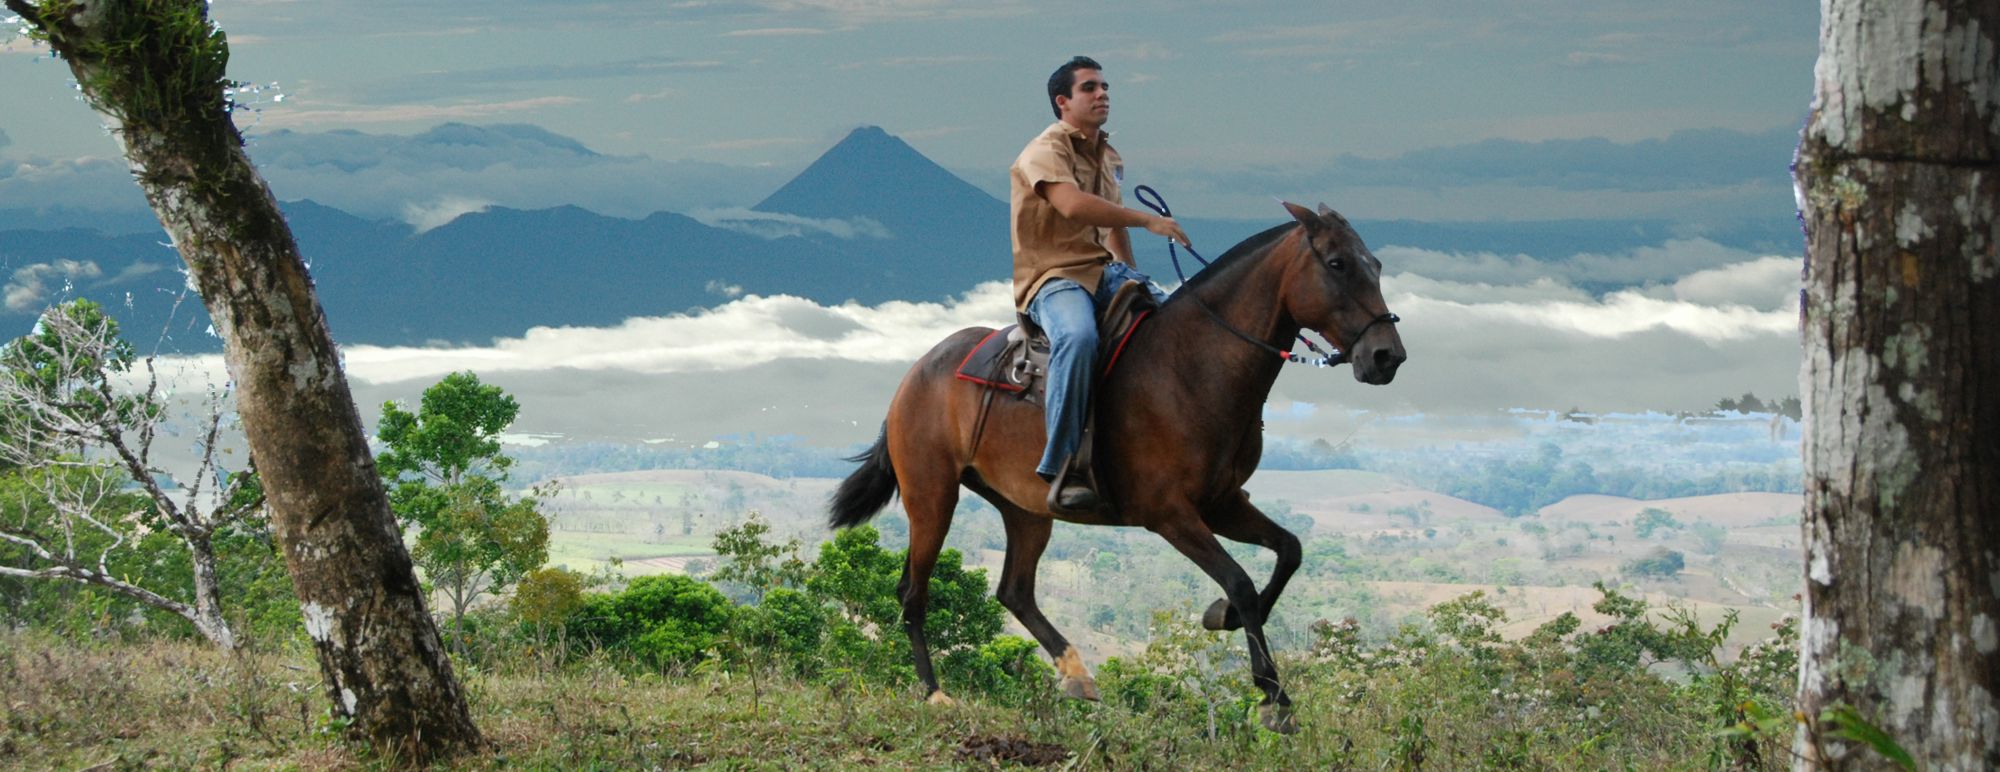 climbing on horseback to the high farm, Serendipity Adventures Costa Rica